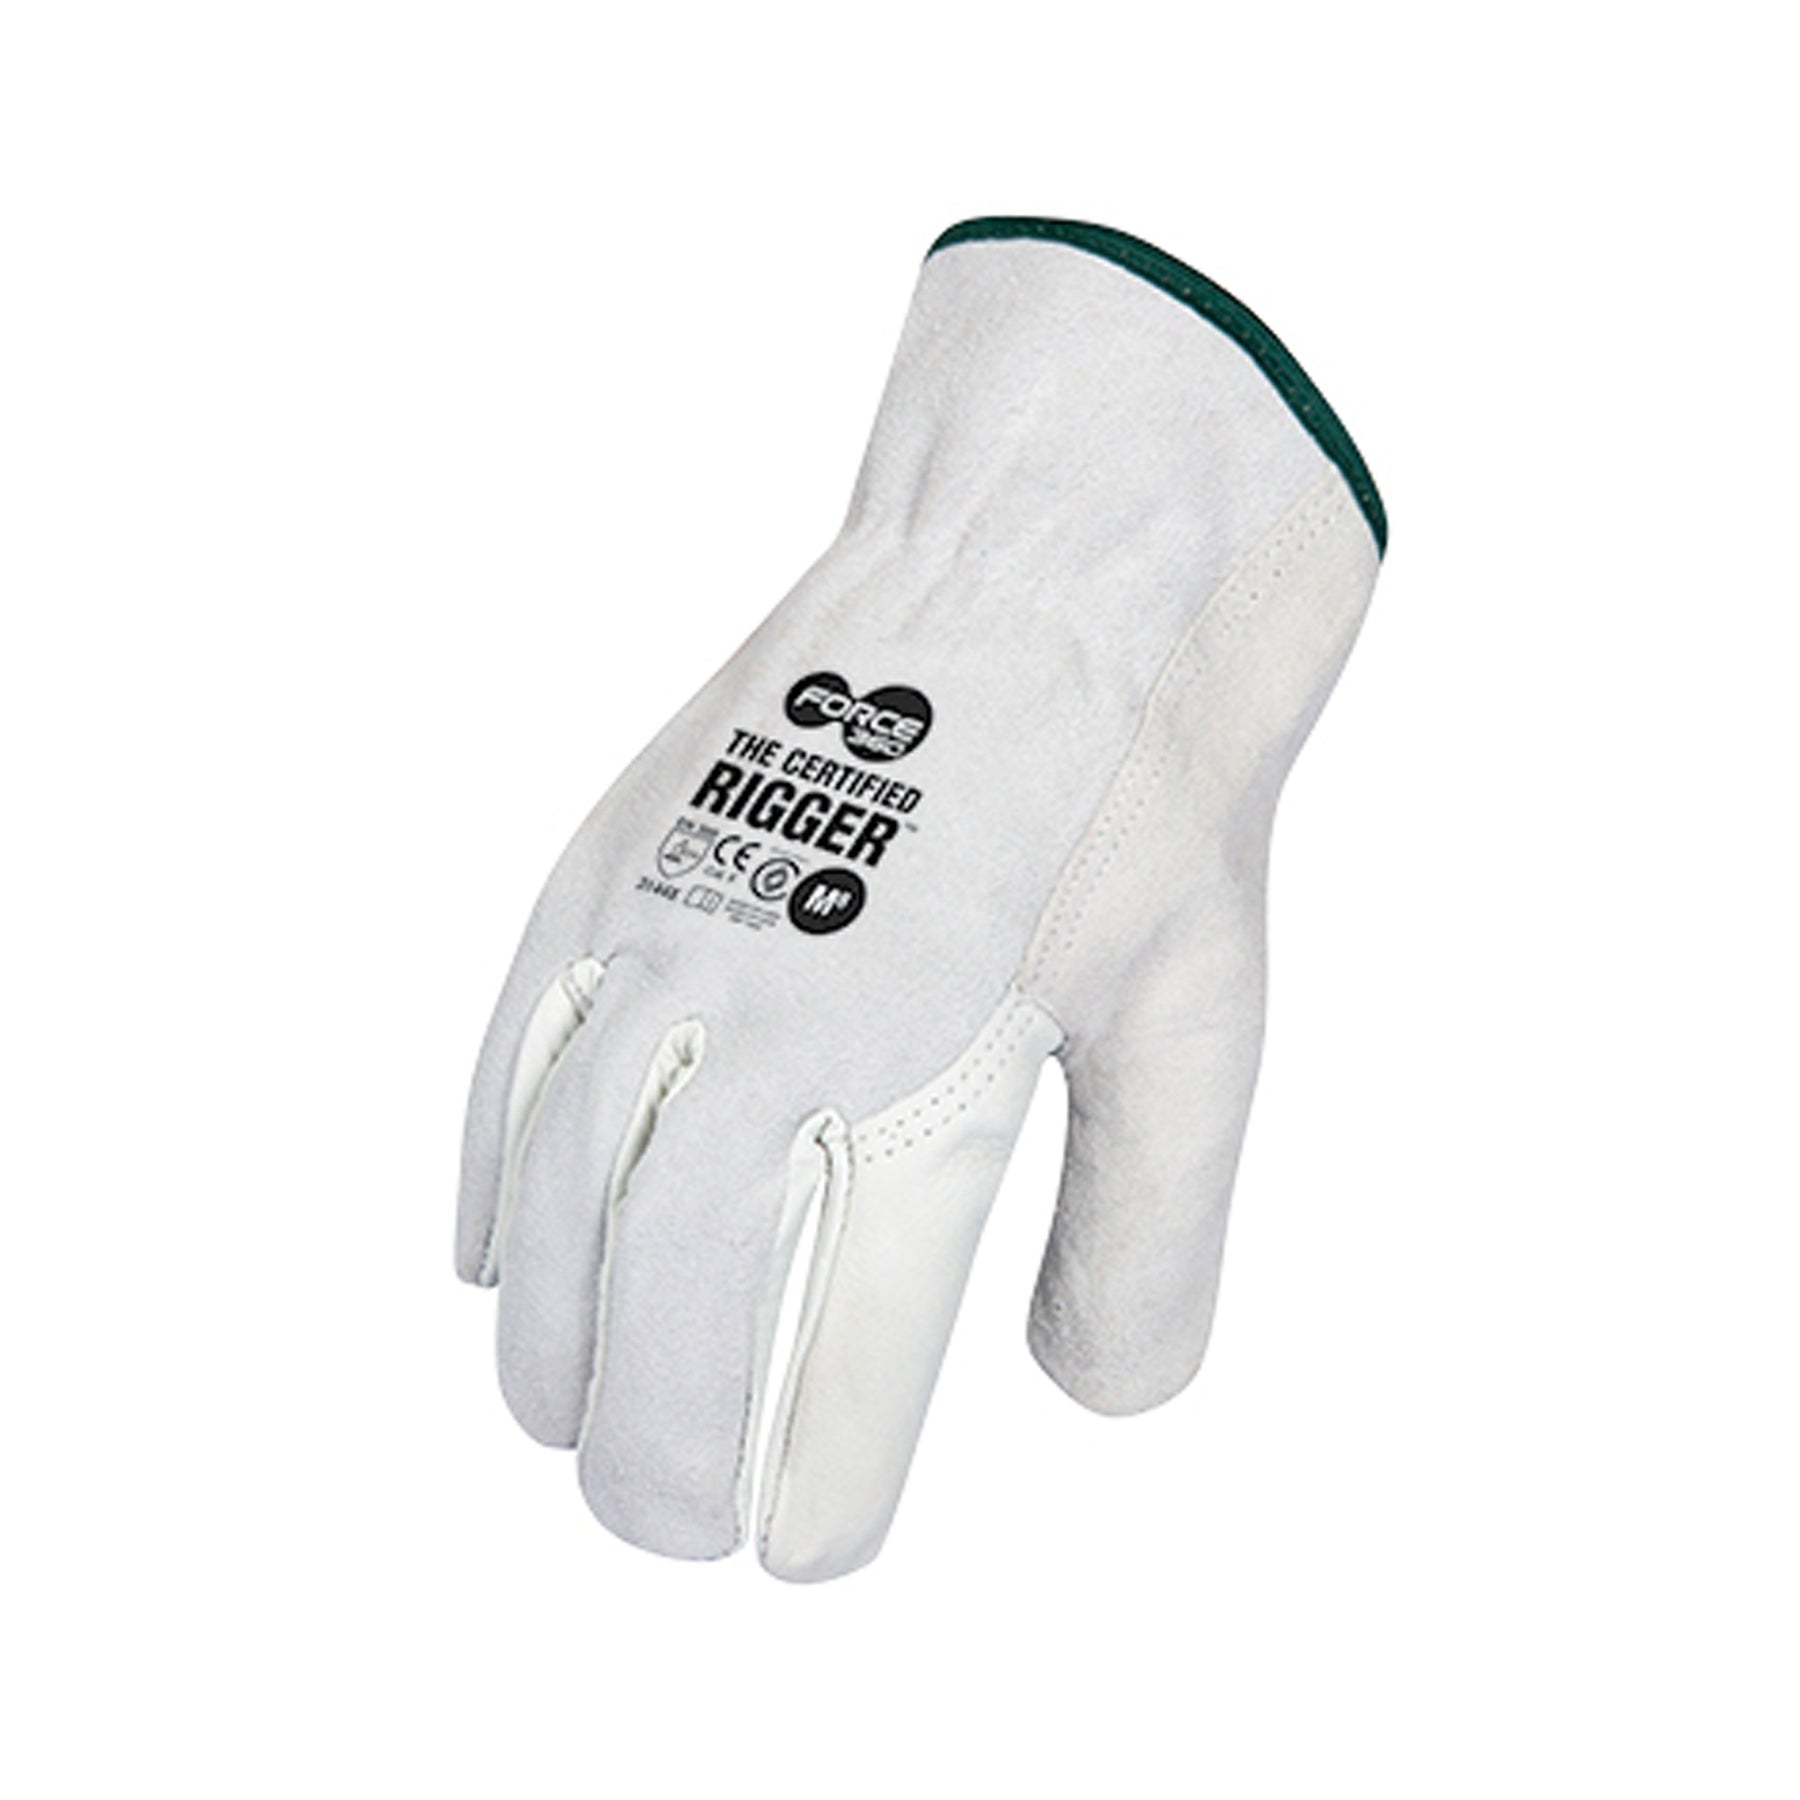 certified rigger glove in split back cowhide